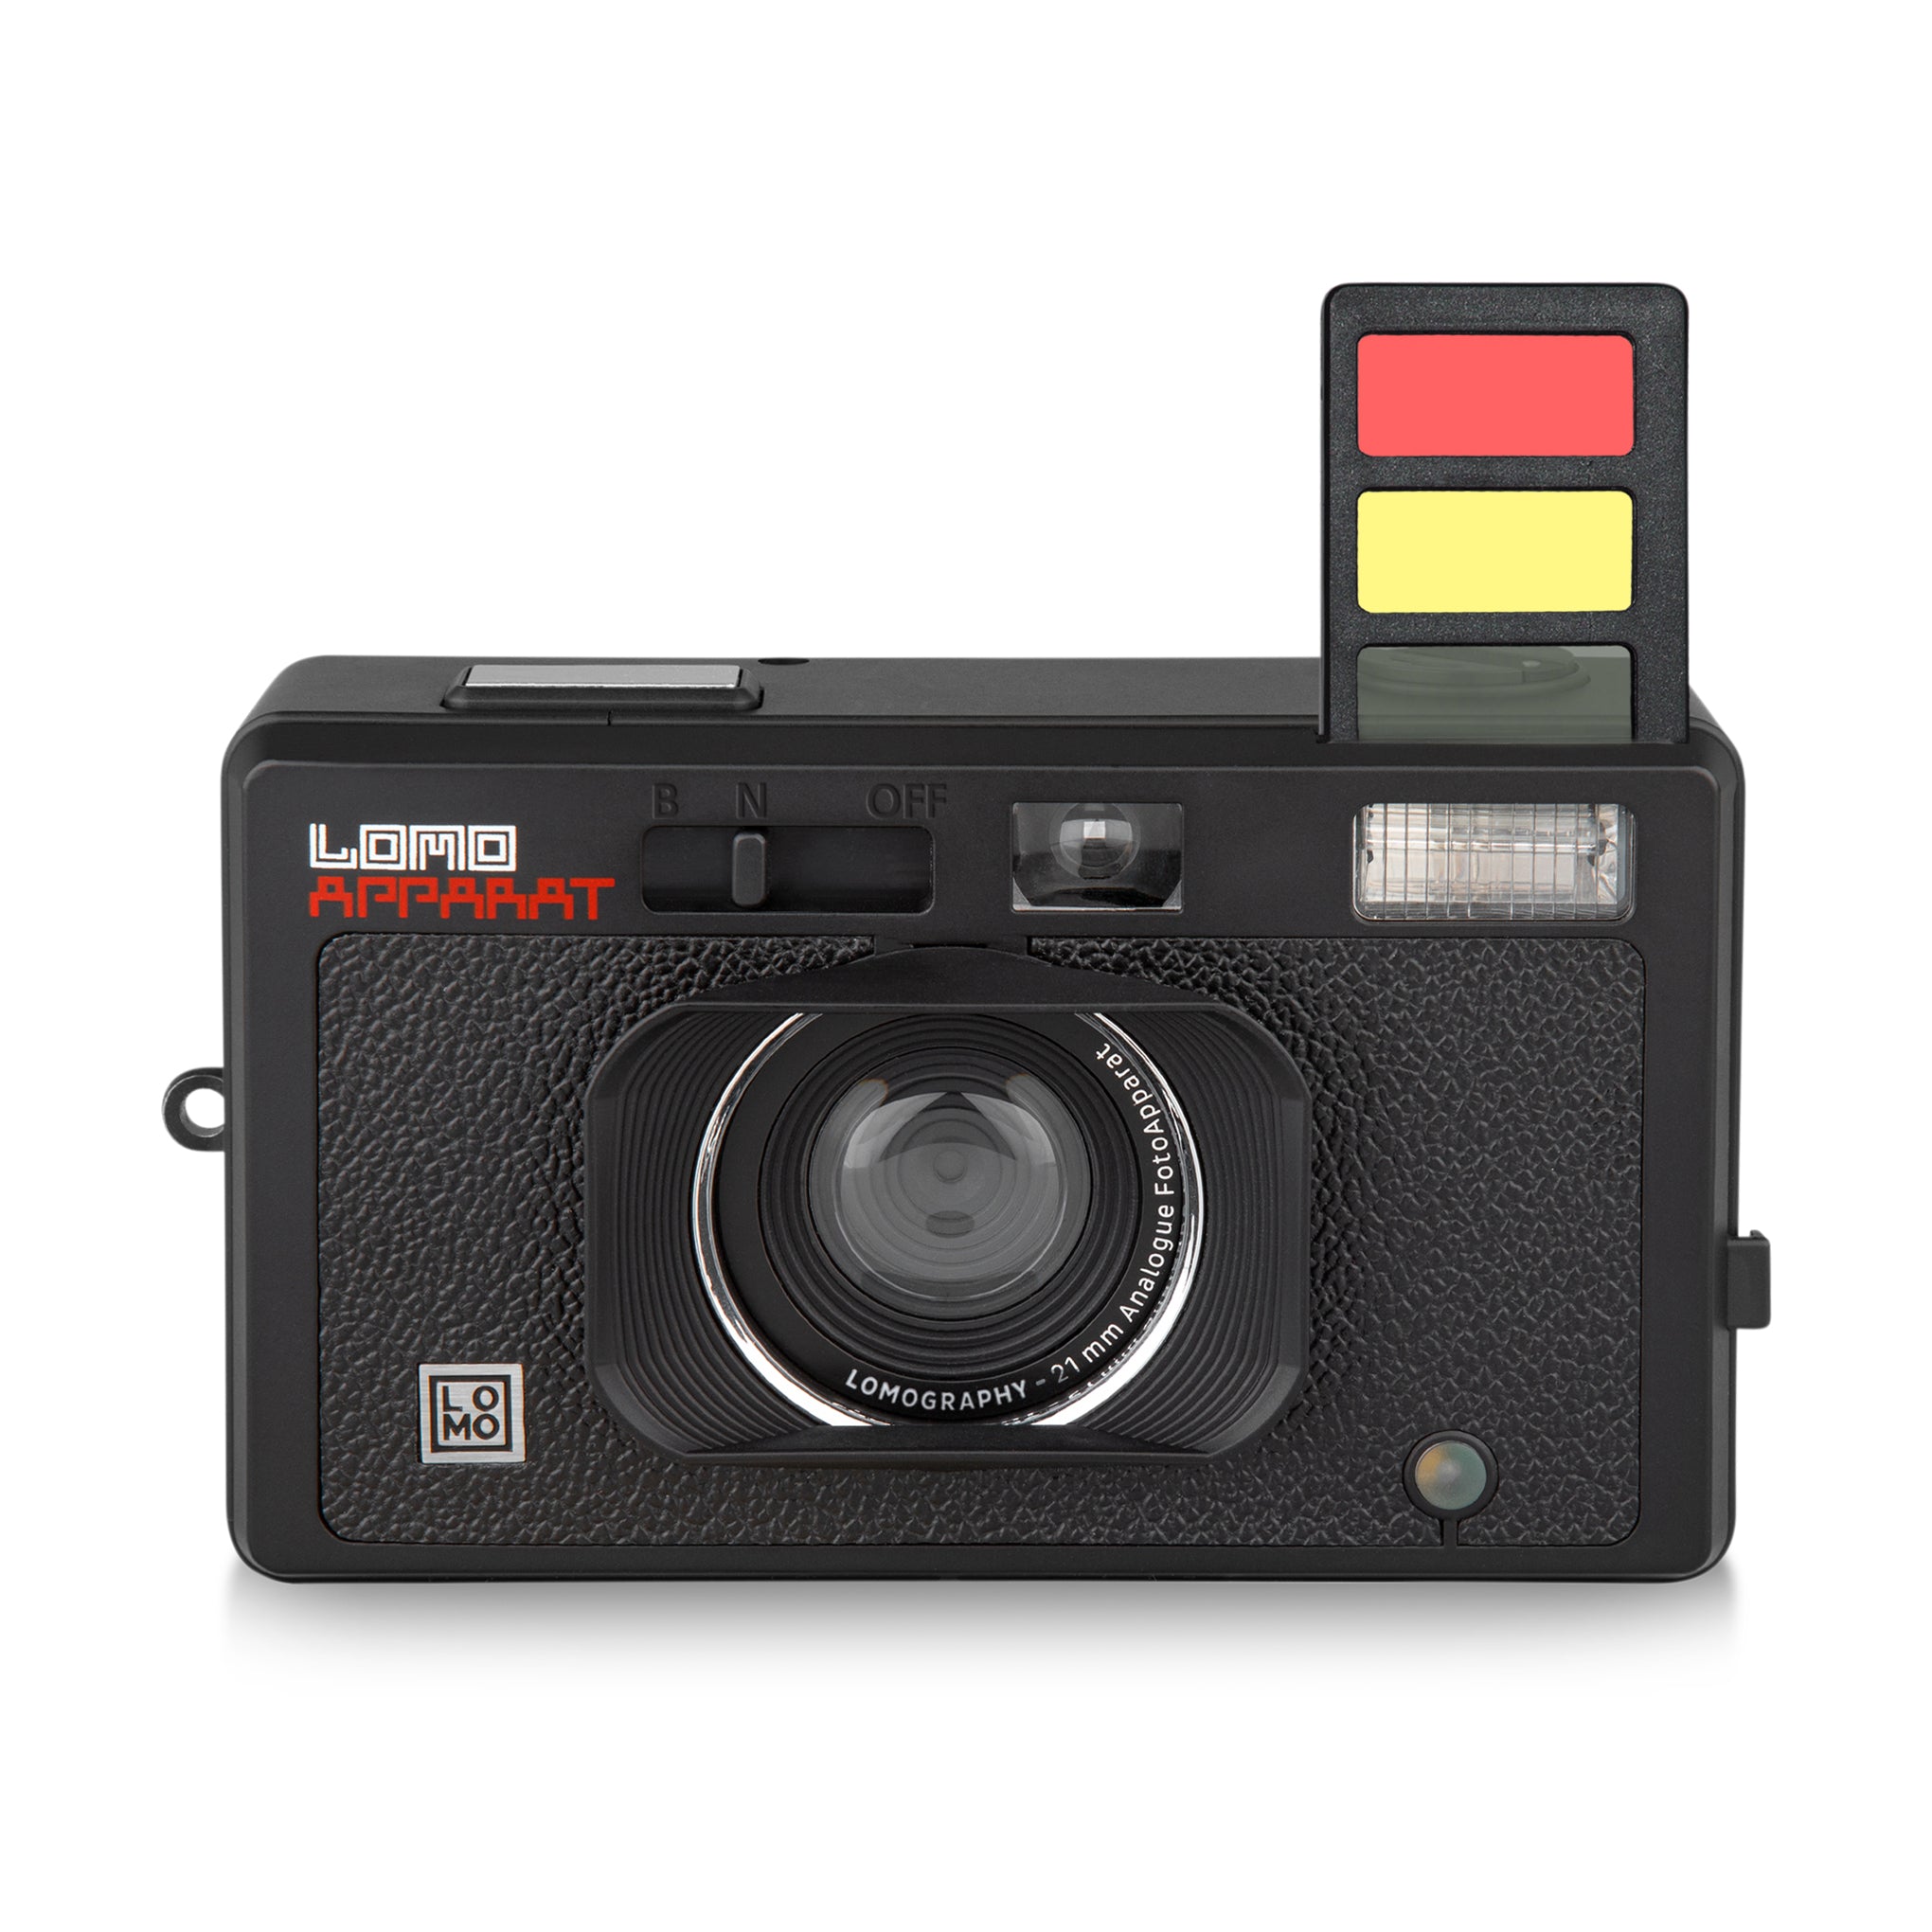 Polaroid Go Generation Two Instant Camera, White – Brooklyn Museum